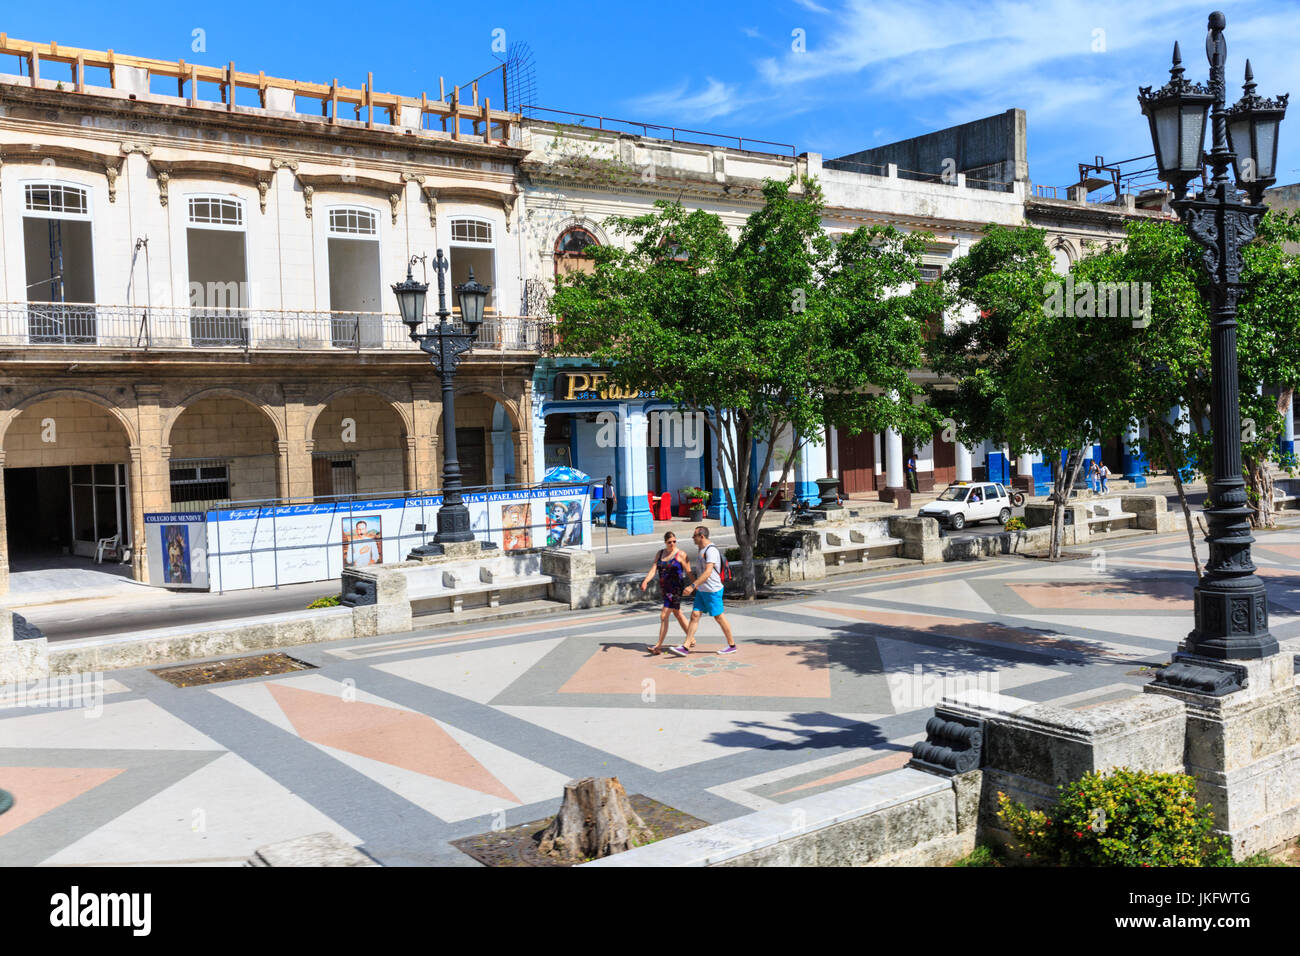 Paseo del Prado, Popular pedestrian boulevard in Old Havana, Cuba Stock Photo